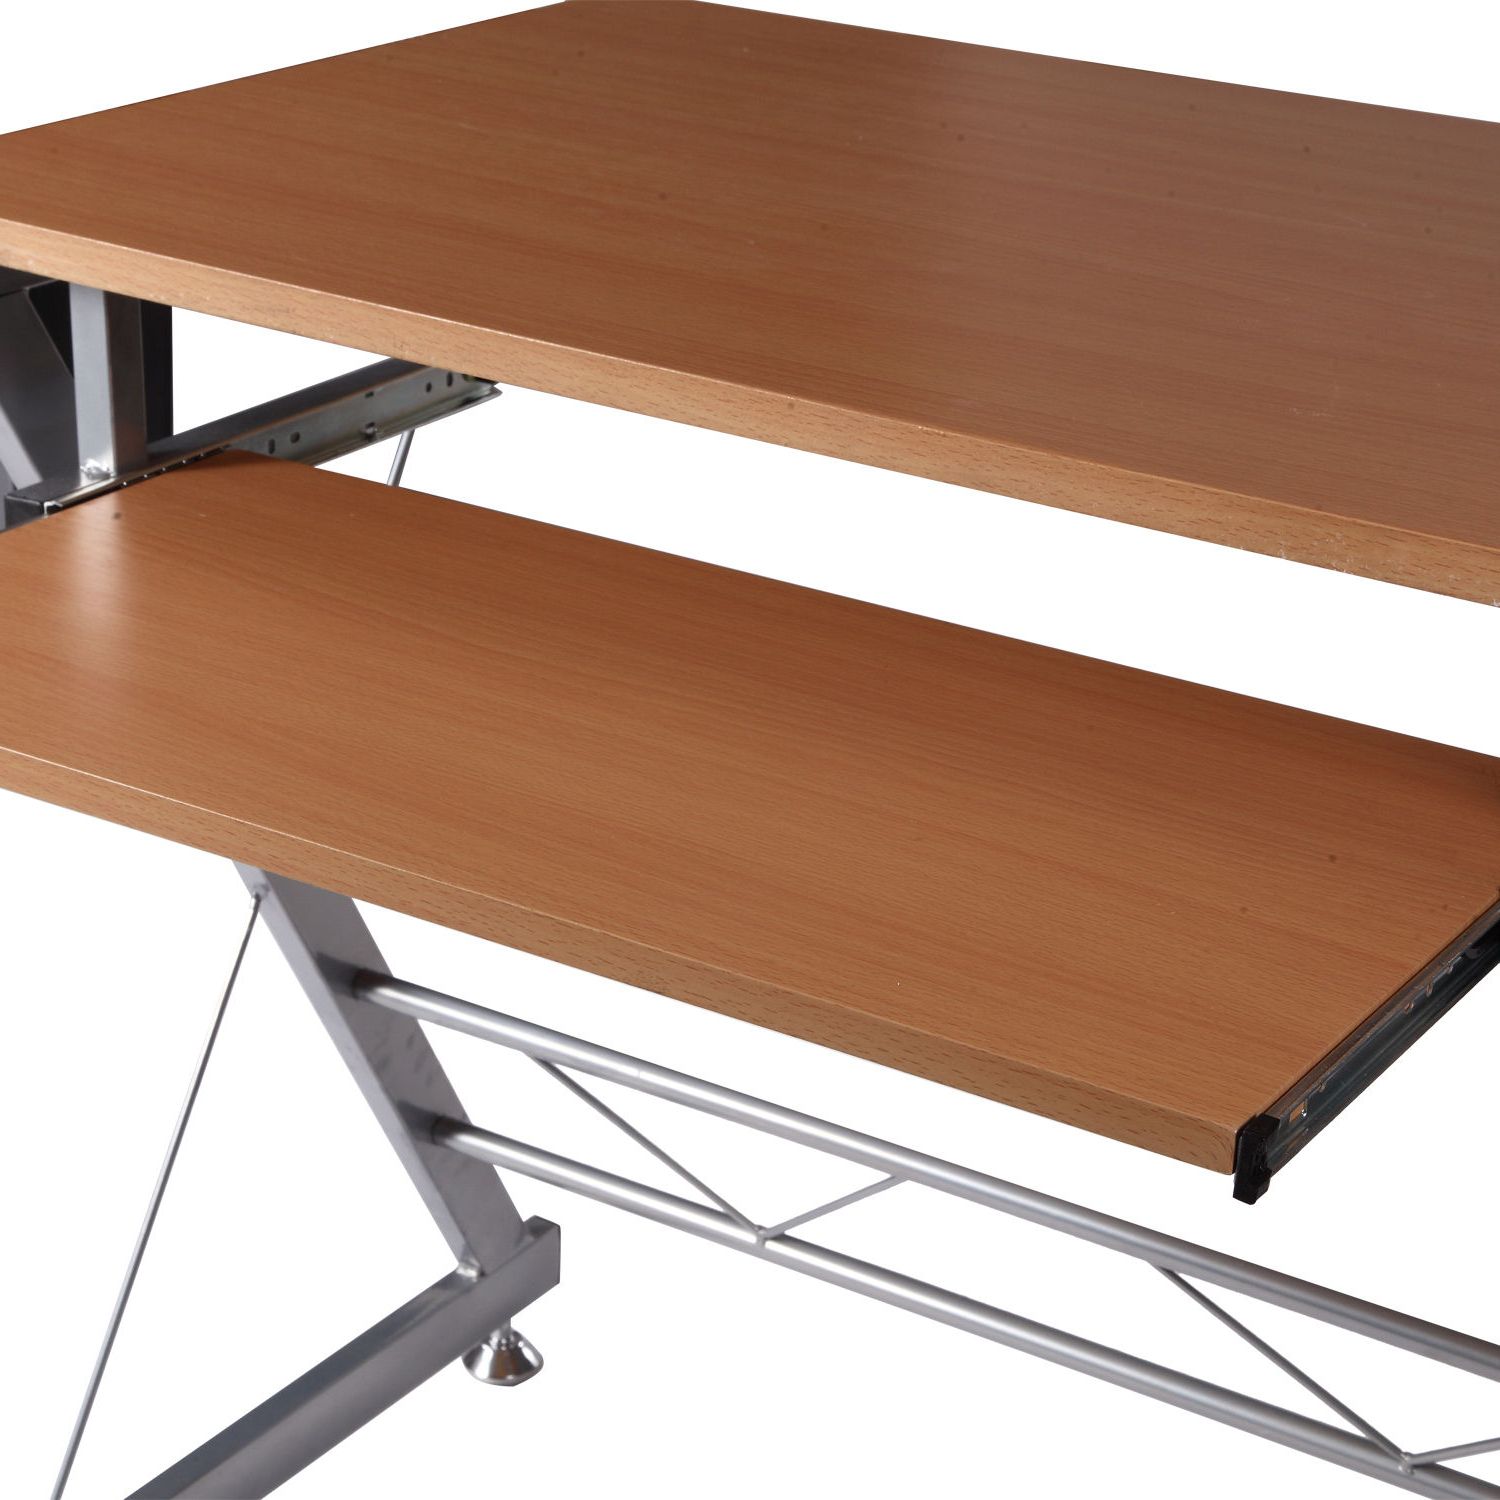 Ebay Intended For Corner Desks With Keyboard Shelf (View 9 of 15)